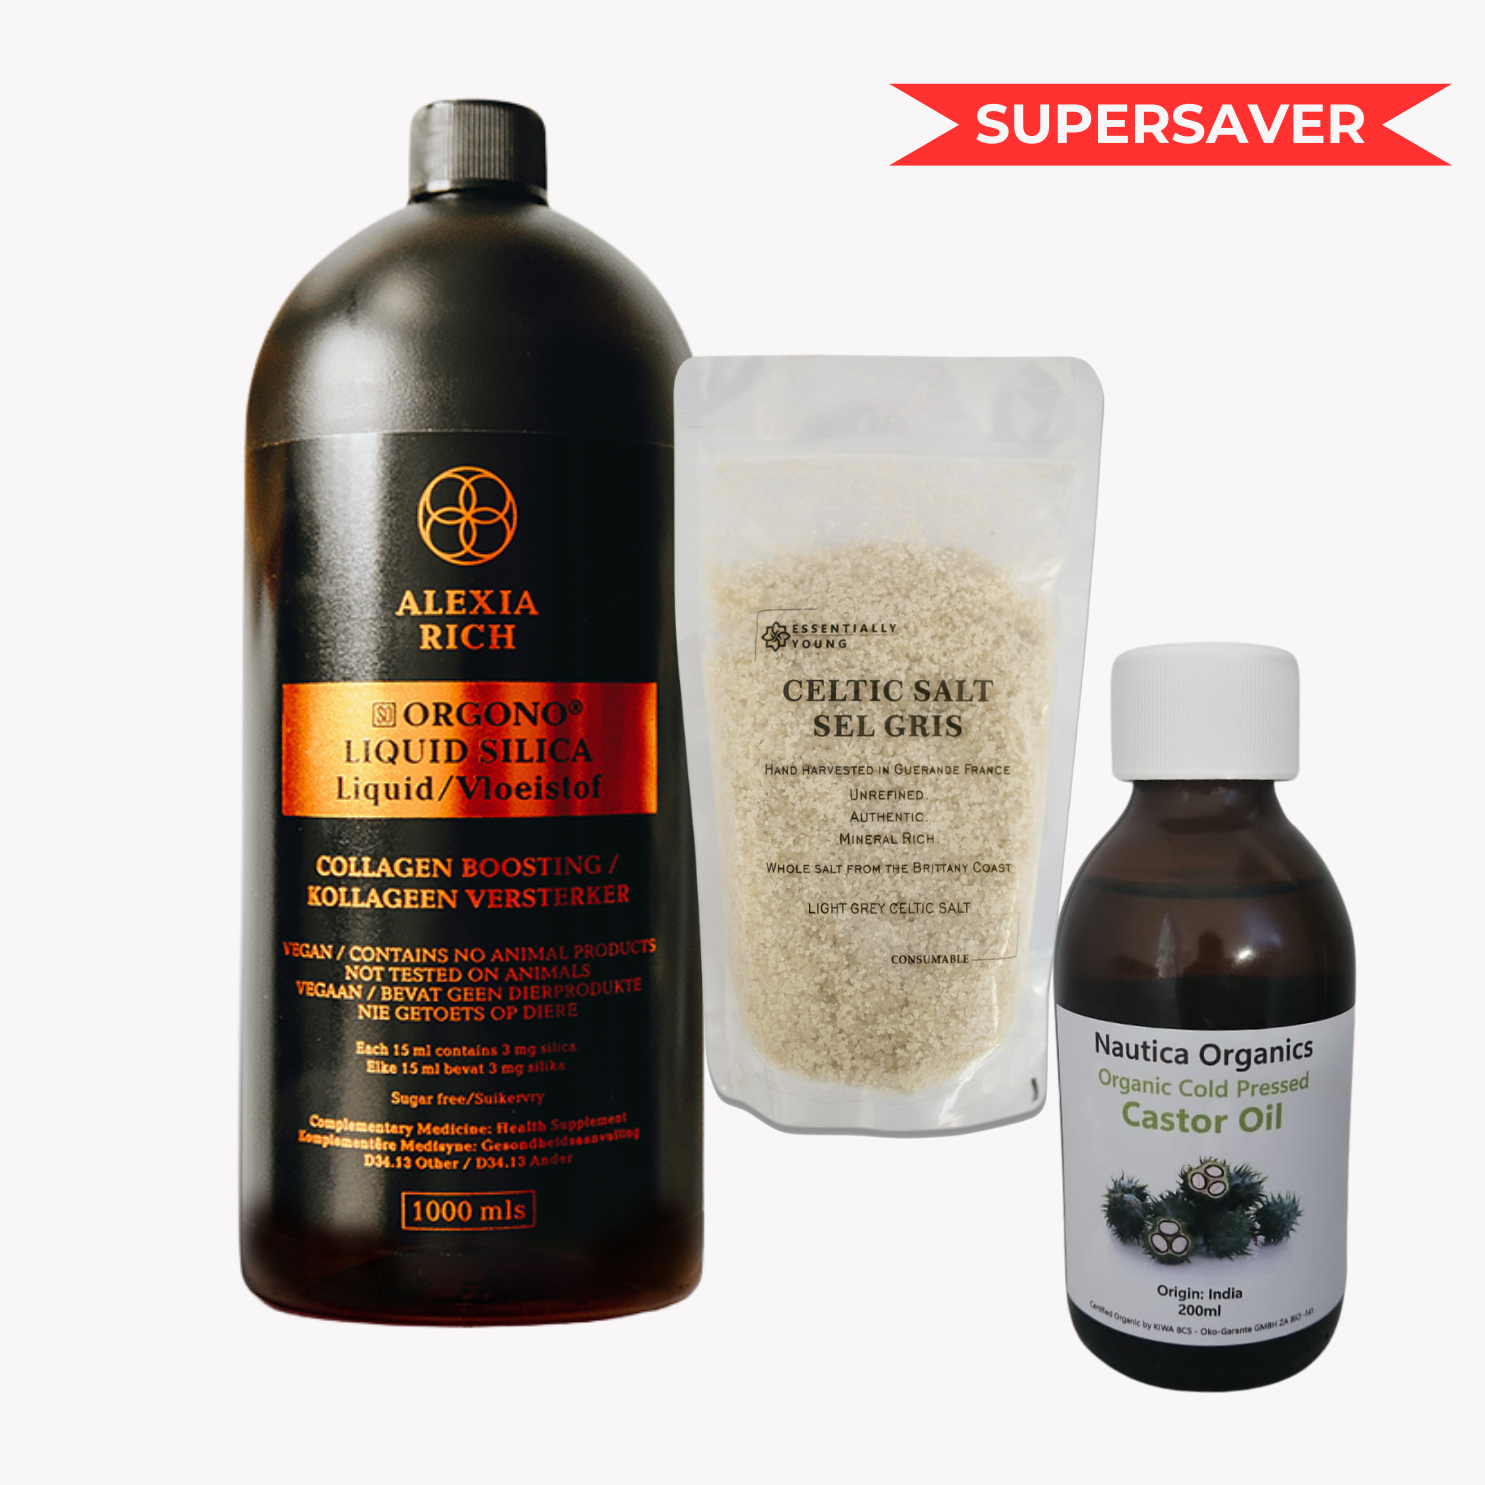 Vegan Power Pack Special - Combine Vegan Collagen Liquid, with Celtic Sea Salt and Organic Castor Oil to get the best health benefits